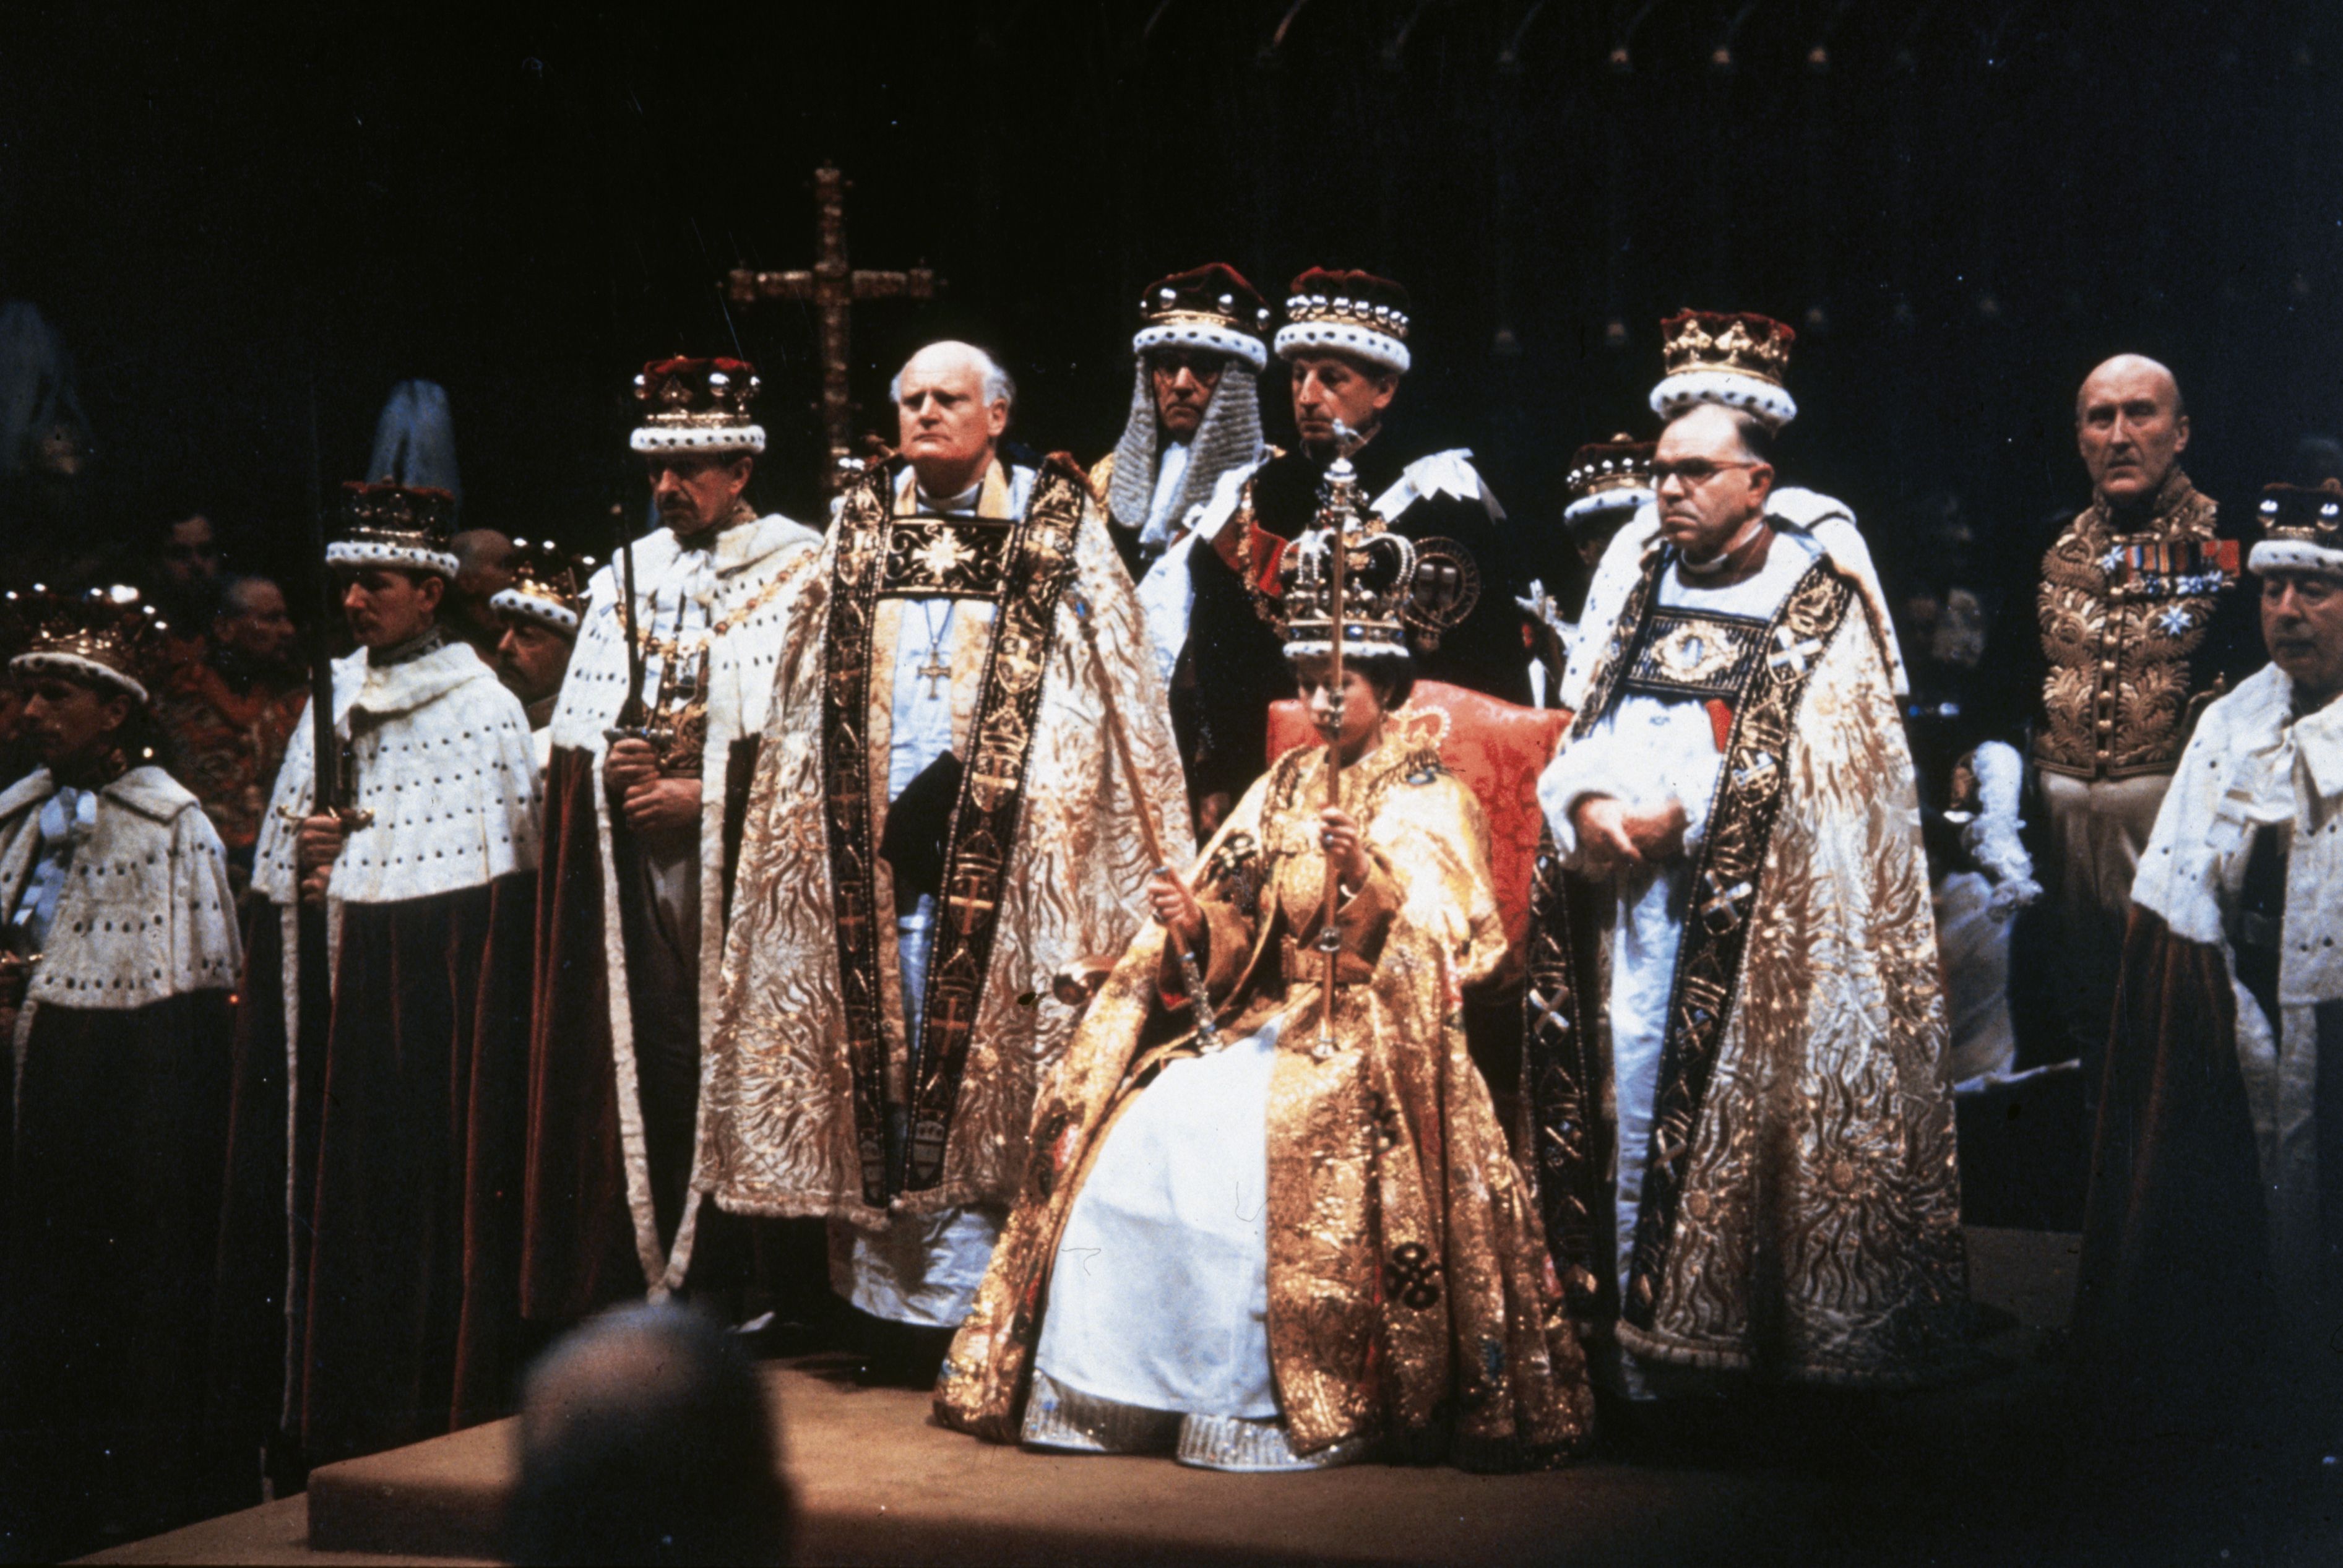 Aventuras Na Historia A Mais Antiga Monarca E A Mais Tempo No Trono Os Recordes Quebrados Por Elizabeth Ii